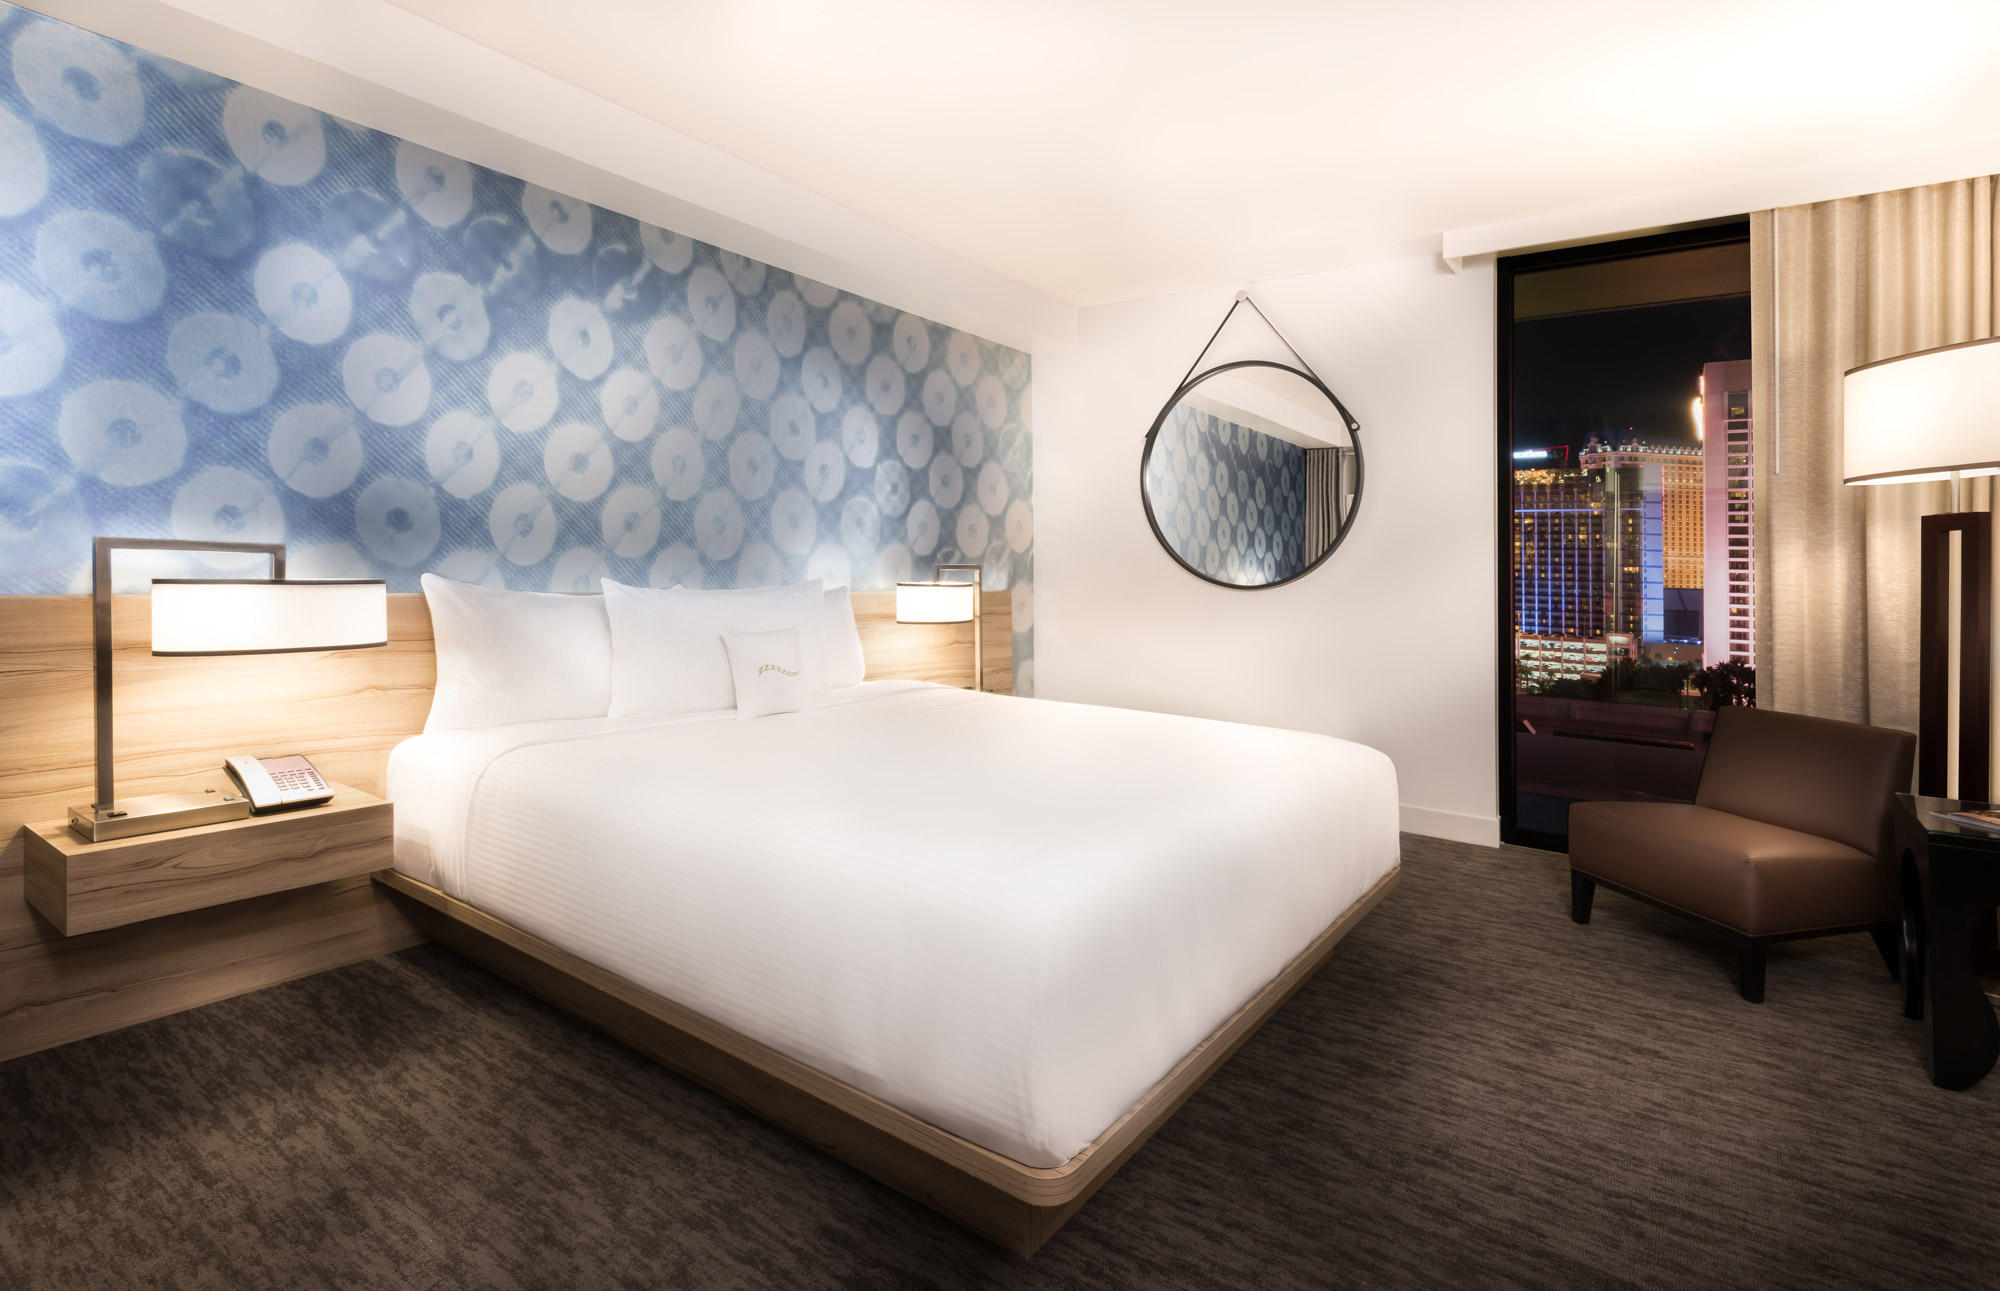 The Linq Hotel rooms in Las Vegas.